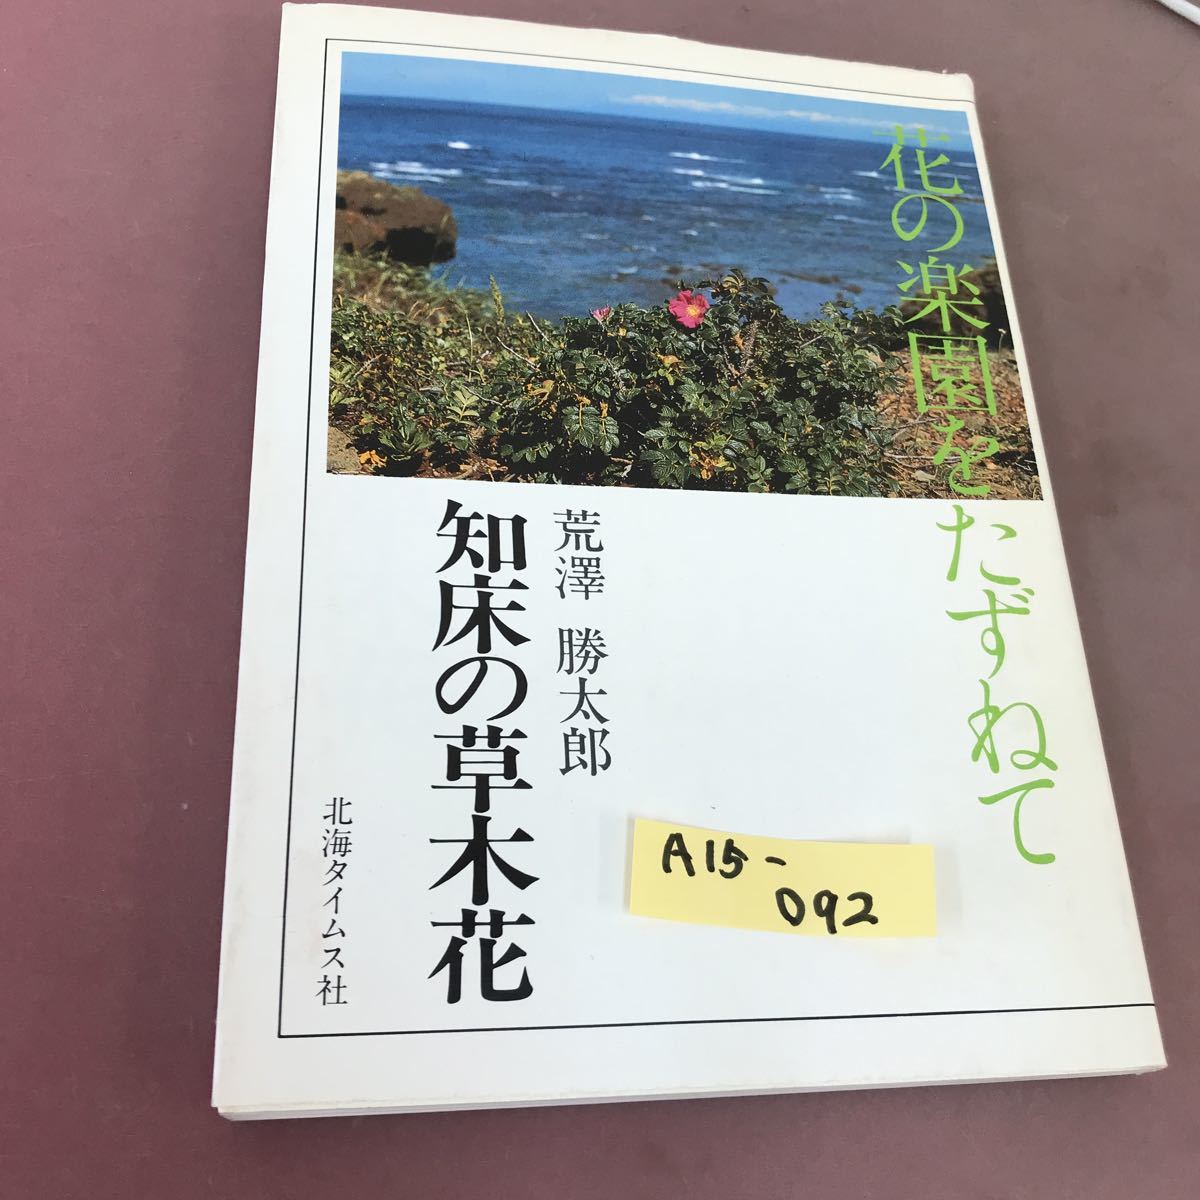 A15-092 花の楽園をたずねて 知床の草木花 荒澤勝太郎 北海タイムズ社